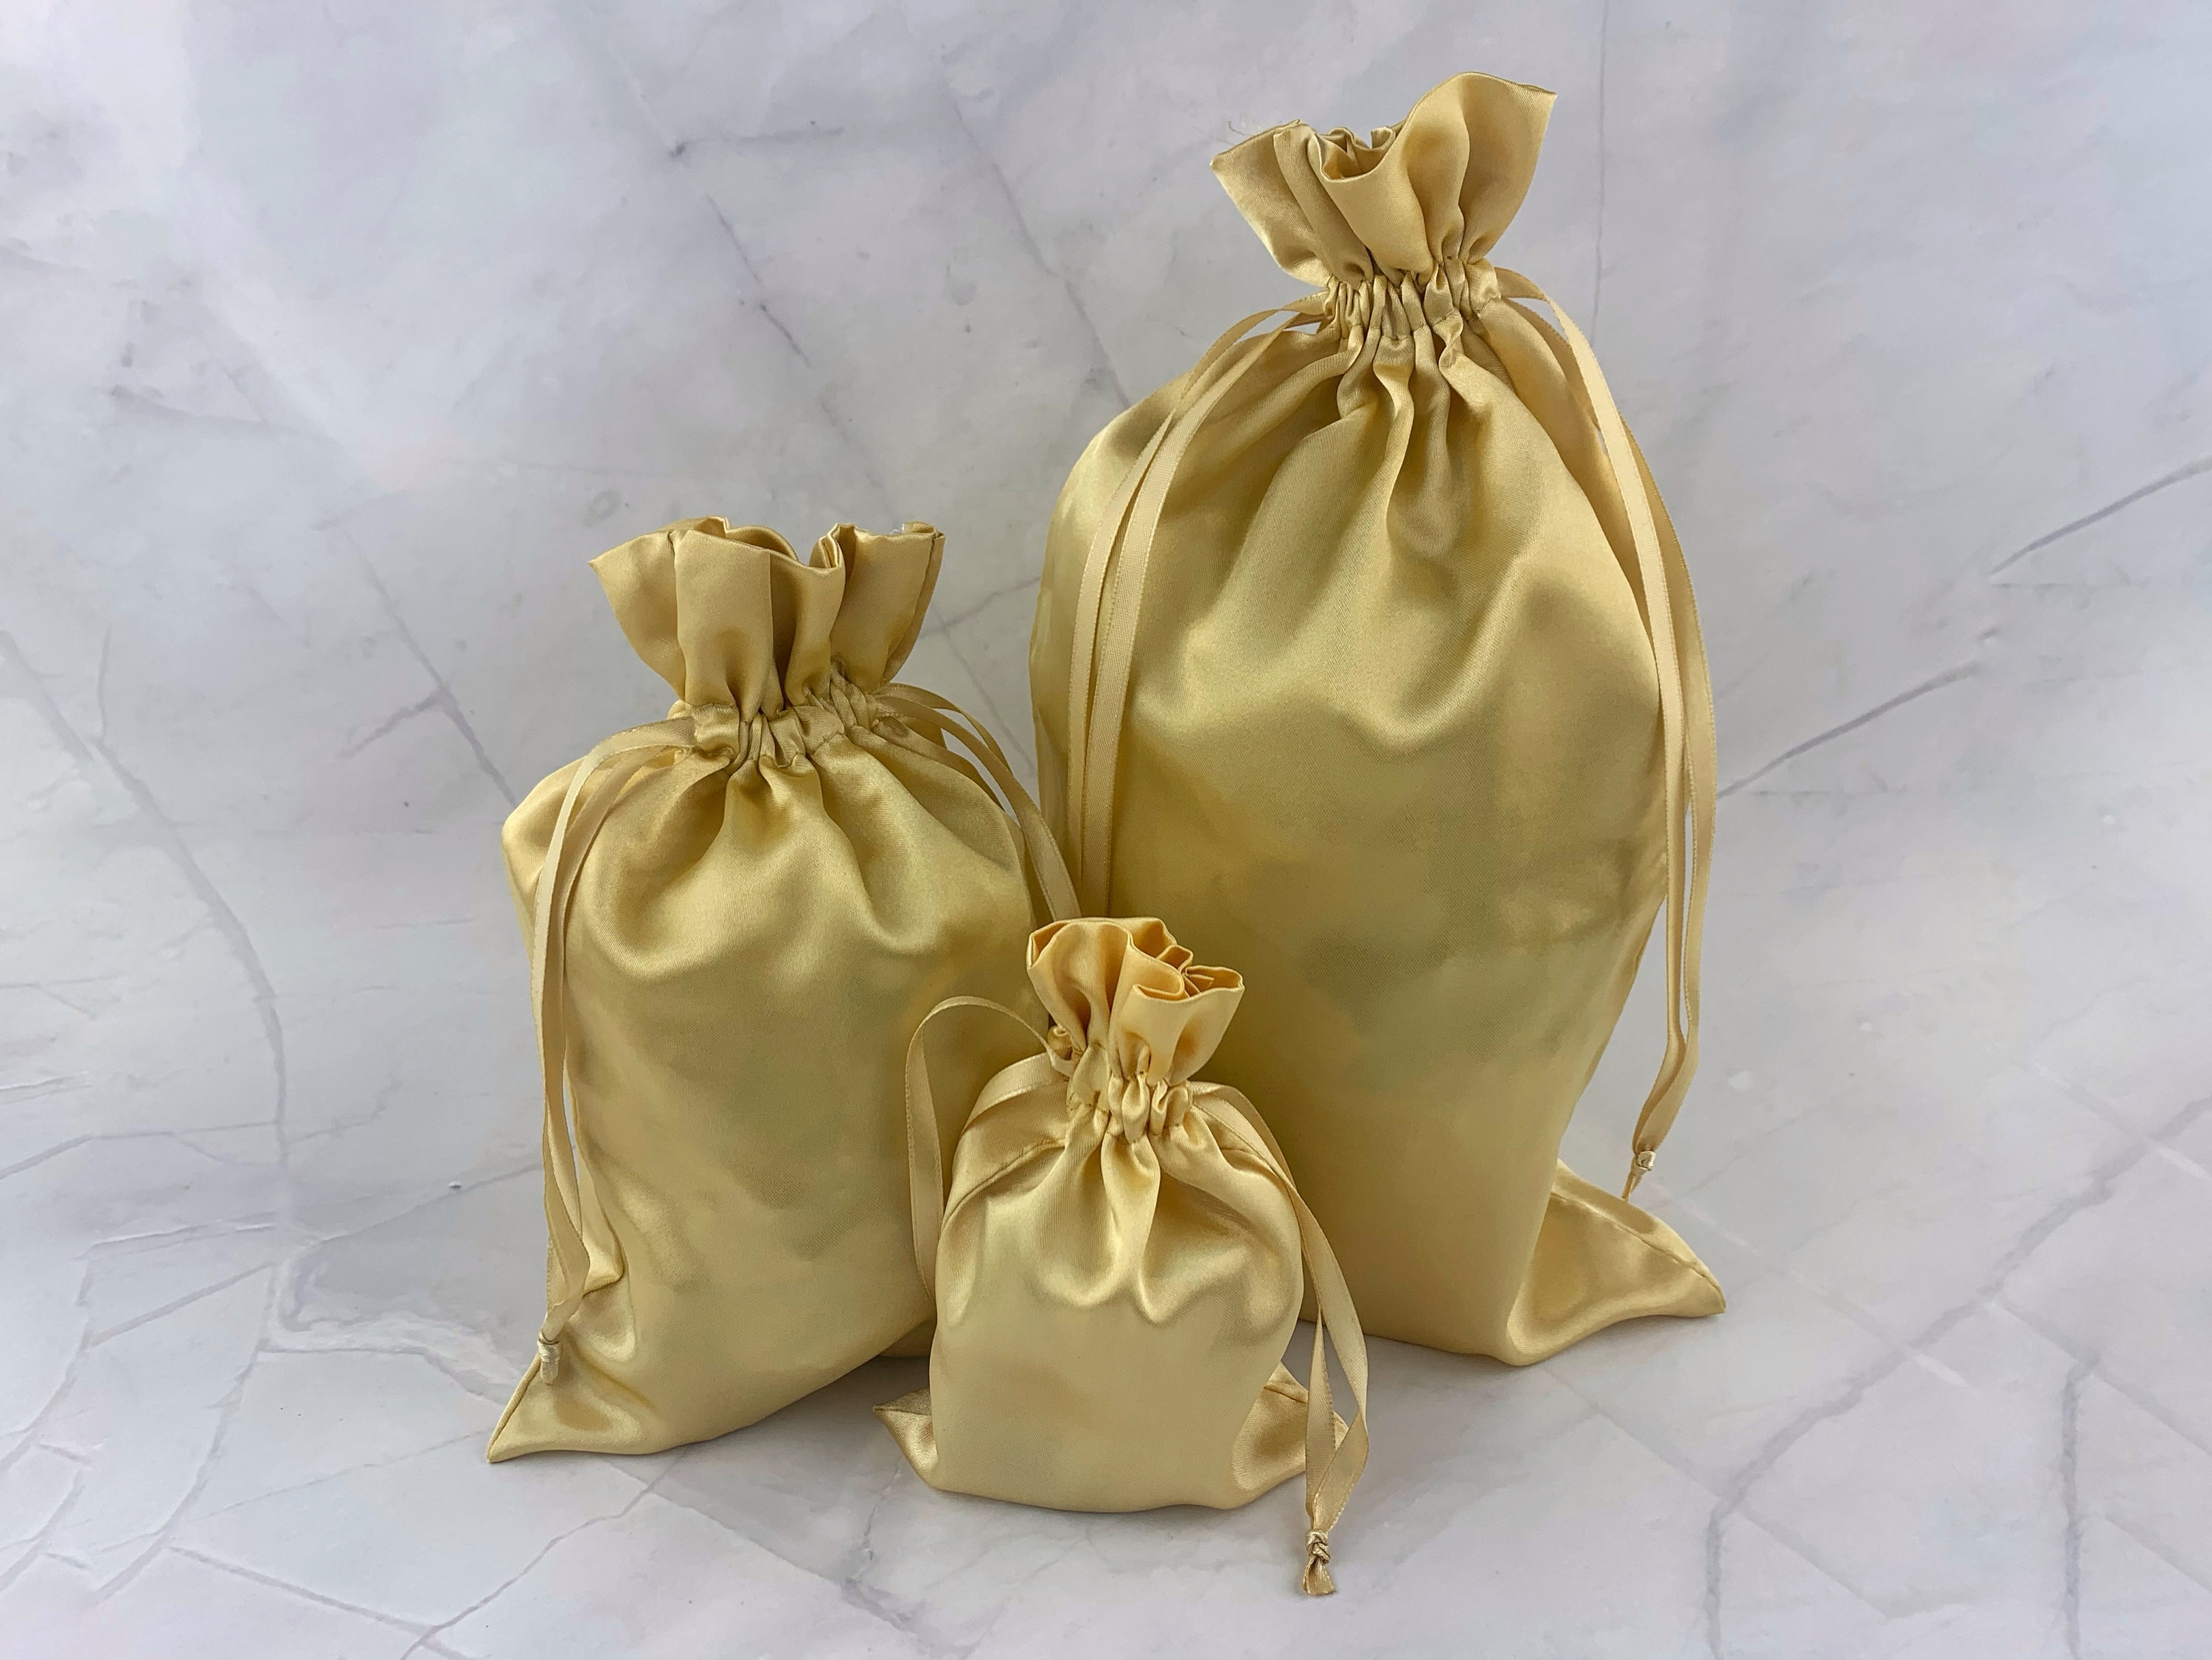 Black & Gold Gift Bags Medium Size - 12 Gift Bag Mix Color Set of 6 B